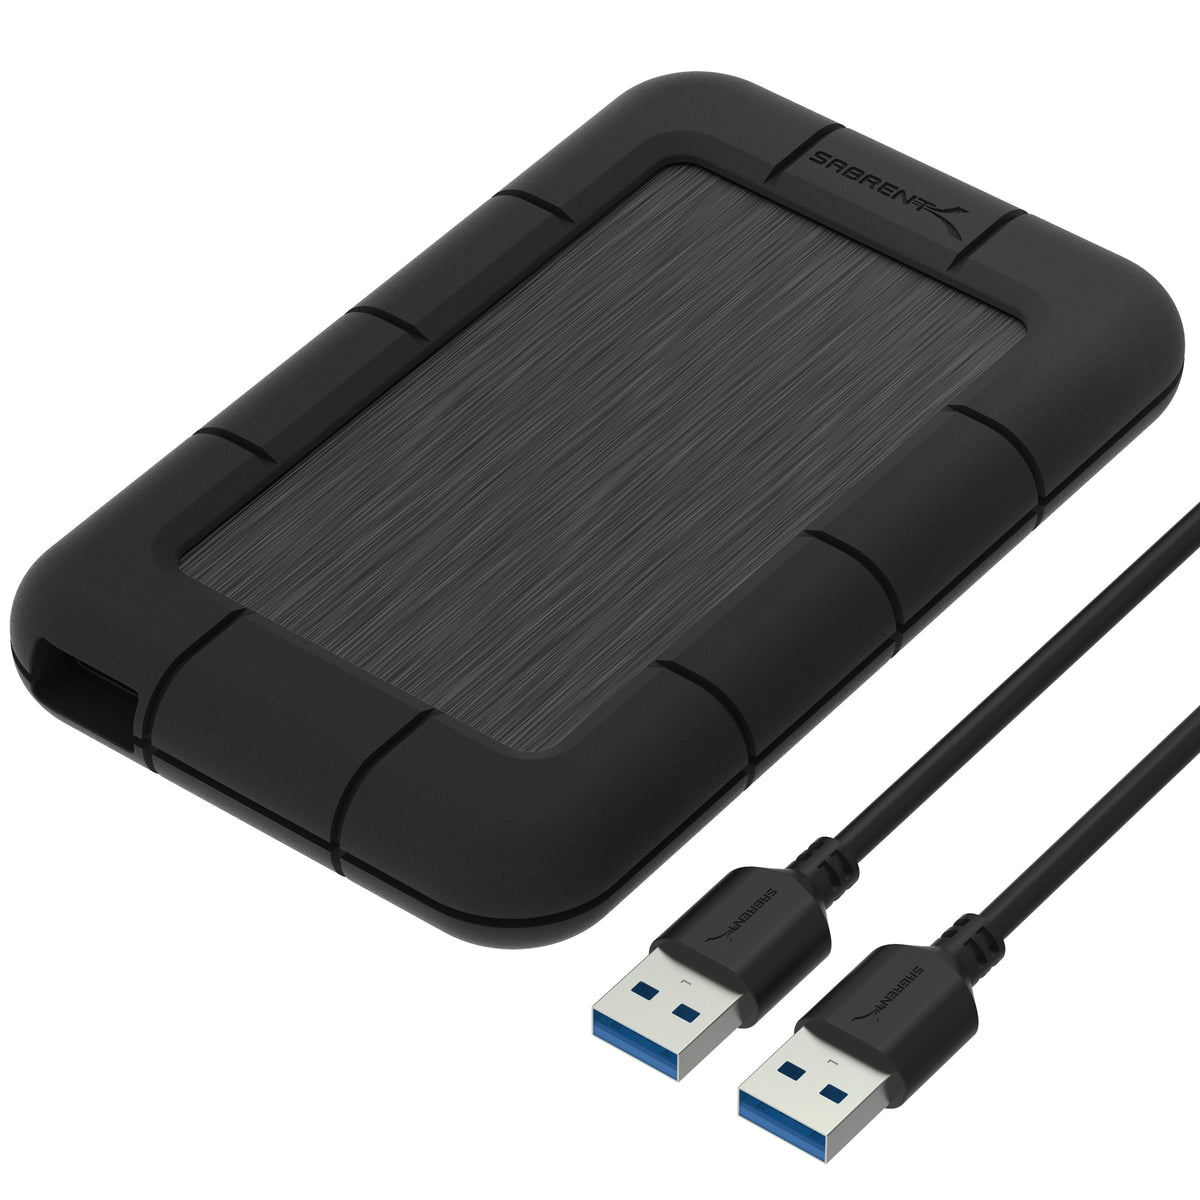 USB 3.0 to SSD / 2.5-Inch SATA External Shockproof Aluminum Hard Drive Enclosure Fits UASP SATA III, Black